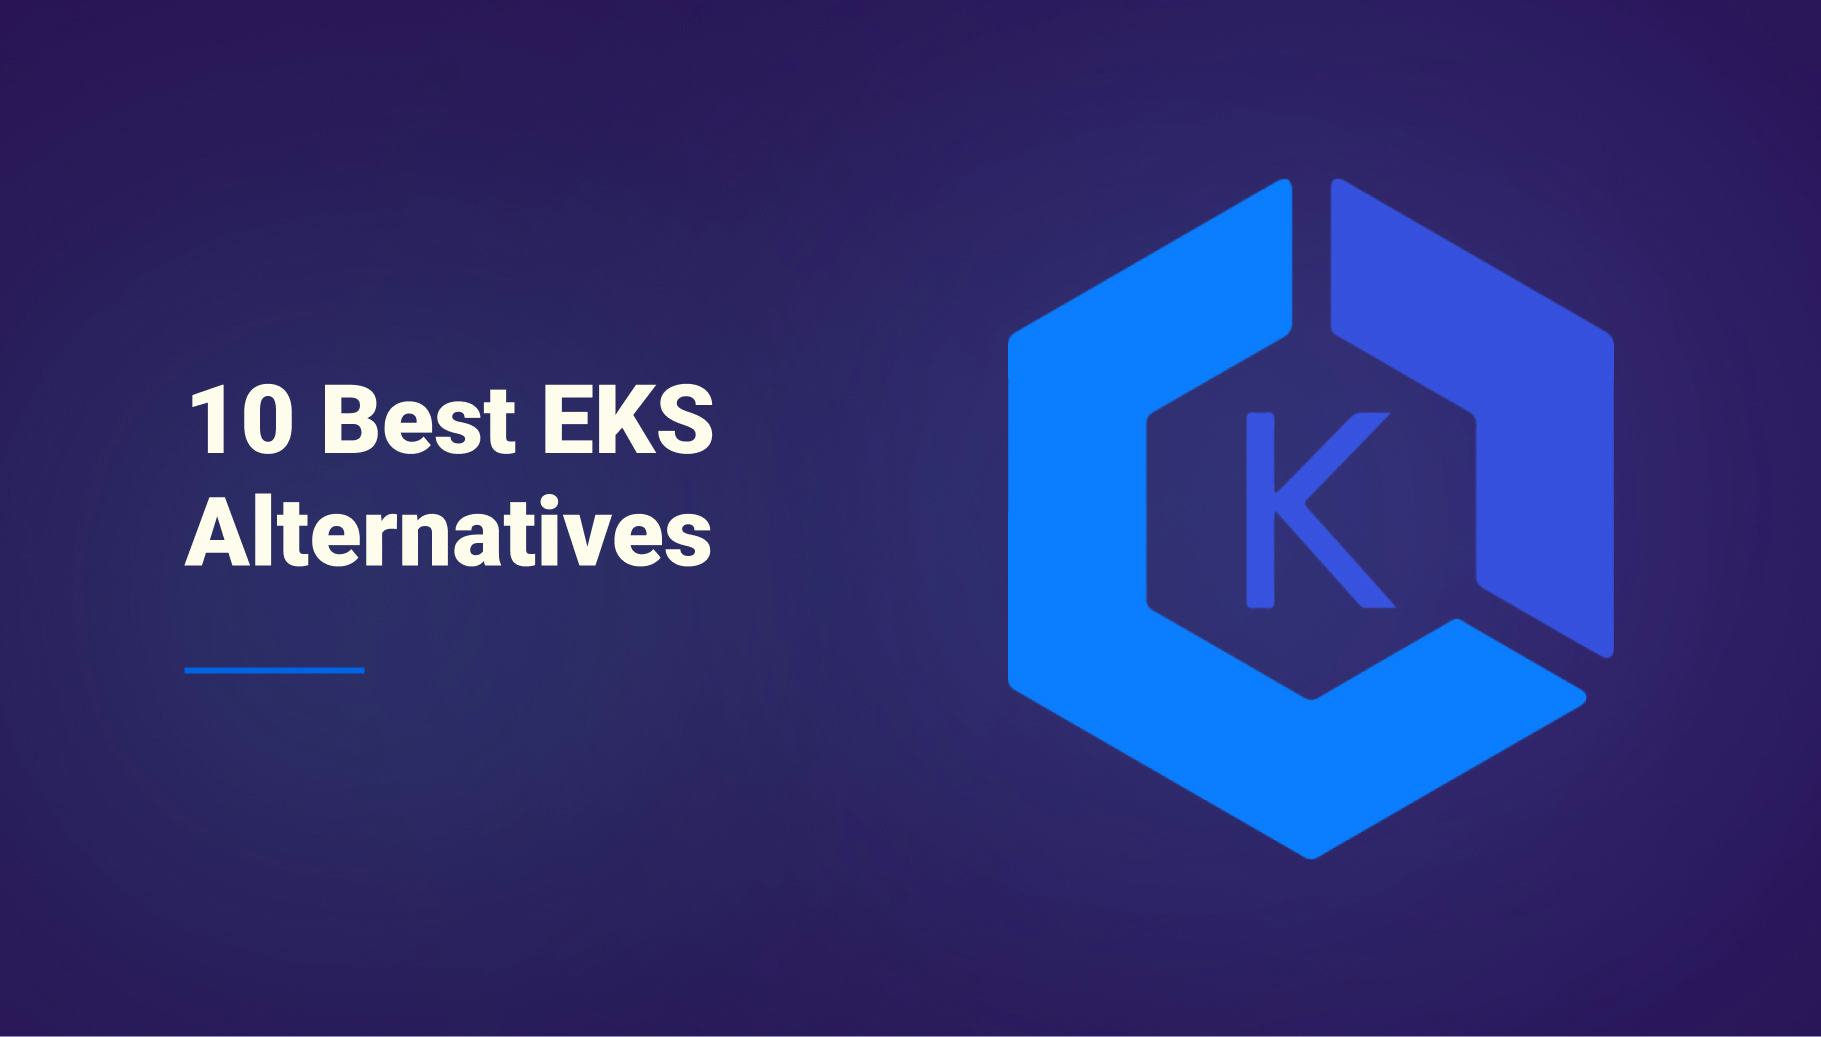 10 Best EKS Alternatives - Qovery